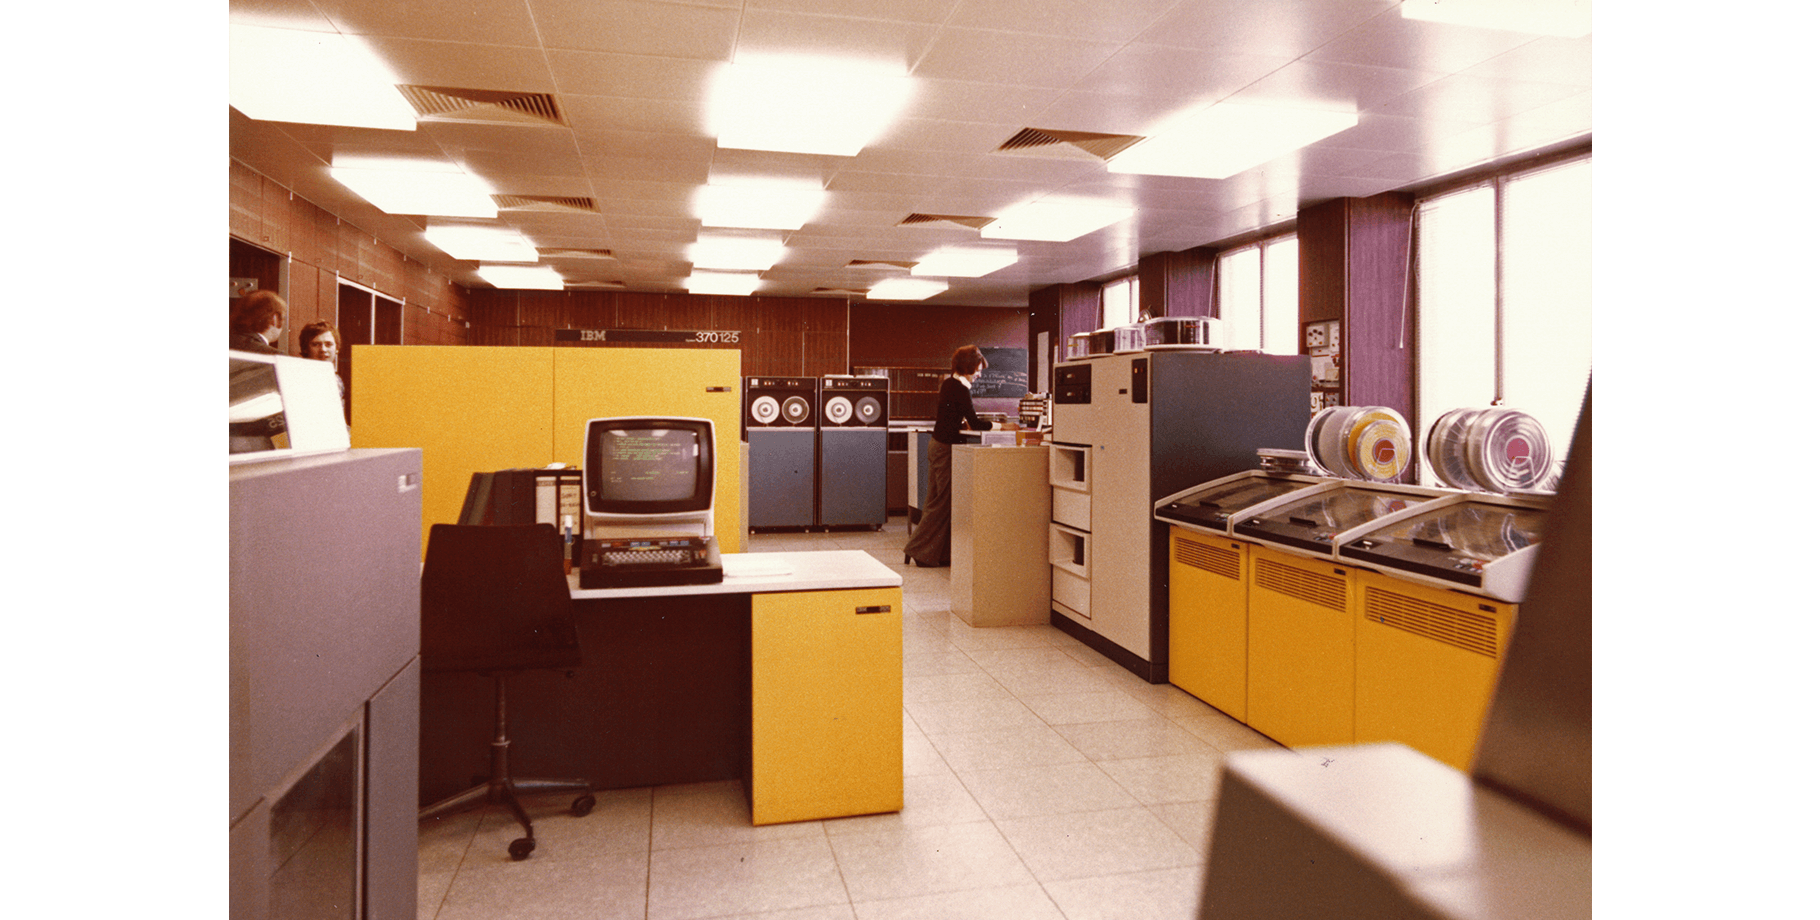 STULZ Modular Data Center 1970